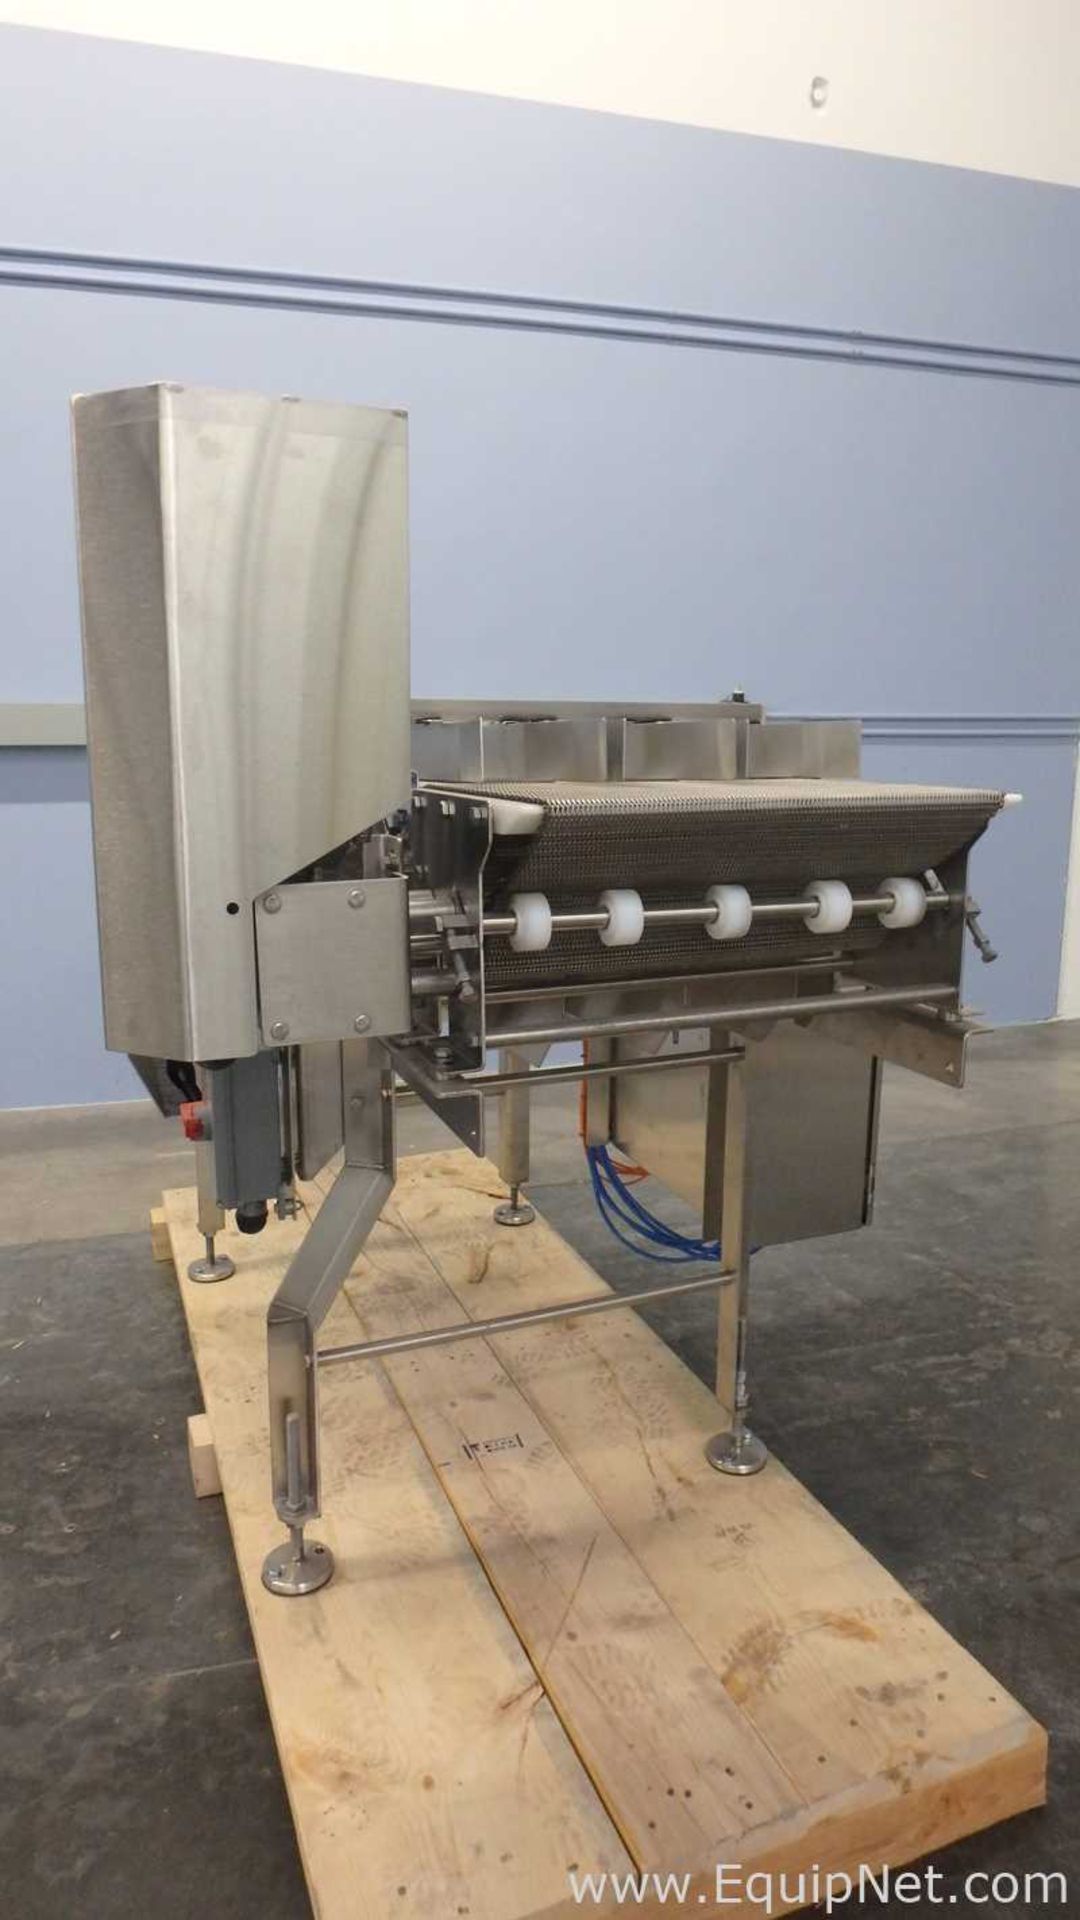 KleenLine Engineered Stainless Steel Conveyor Designed for Full Washdown - Image 20 of 30